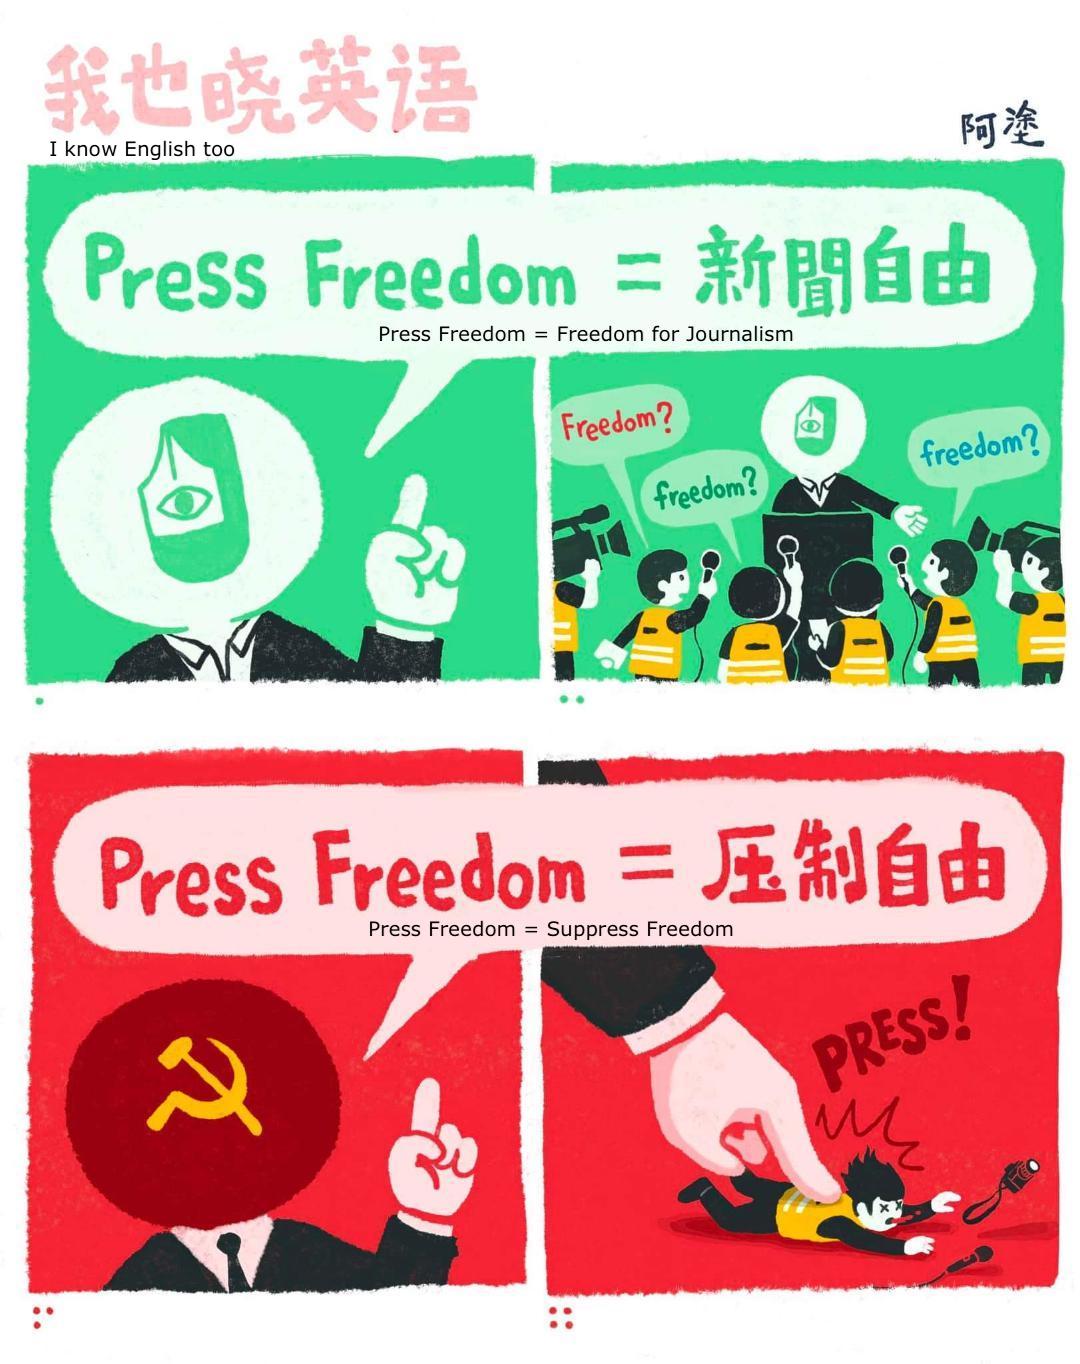 Press Freedom @ ArtoHK